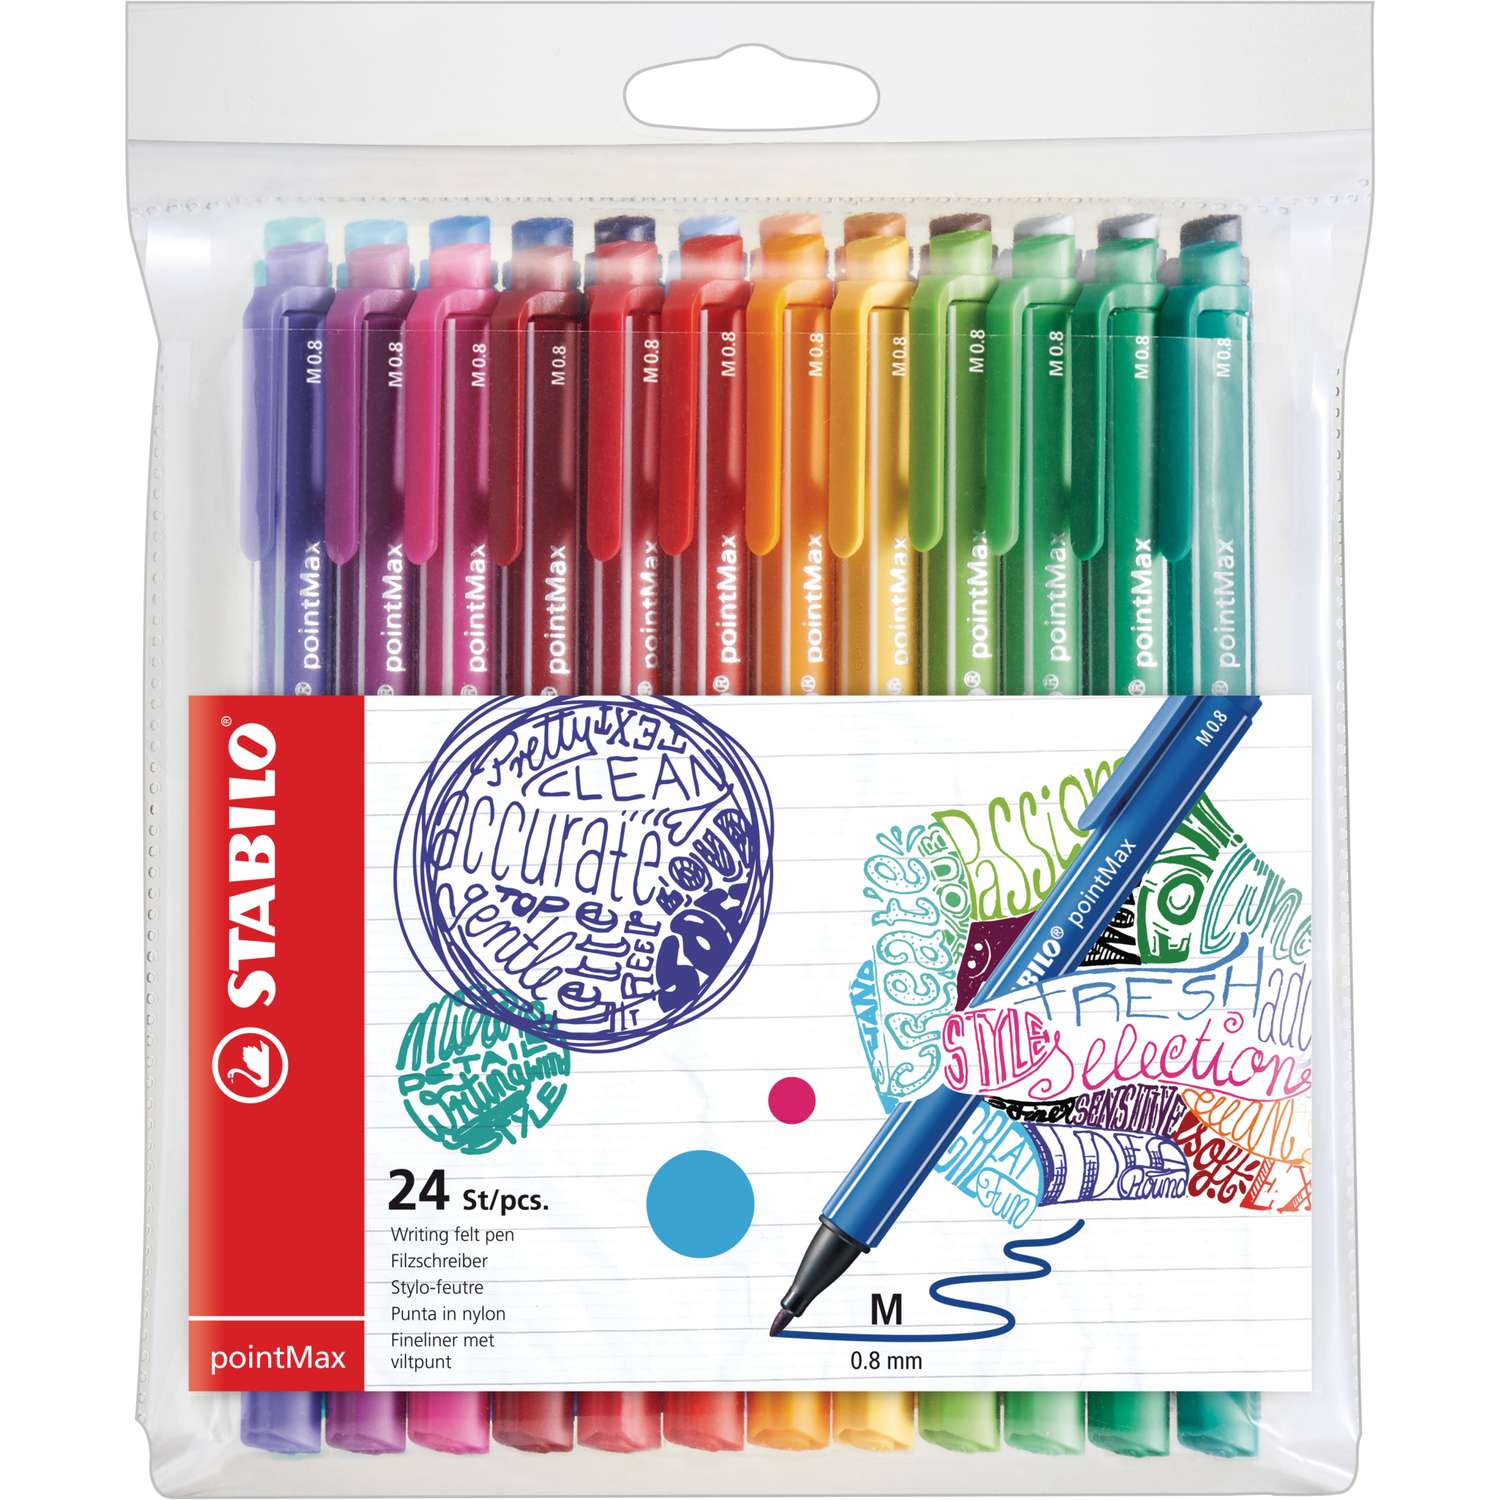 Stabilo pointMax Felt-Tip Pen Sets, 50,000+ Art Supplies